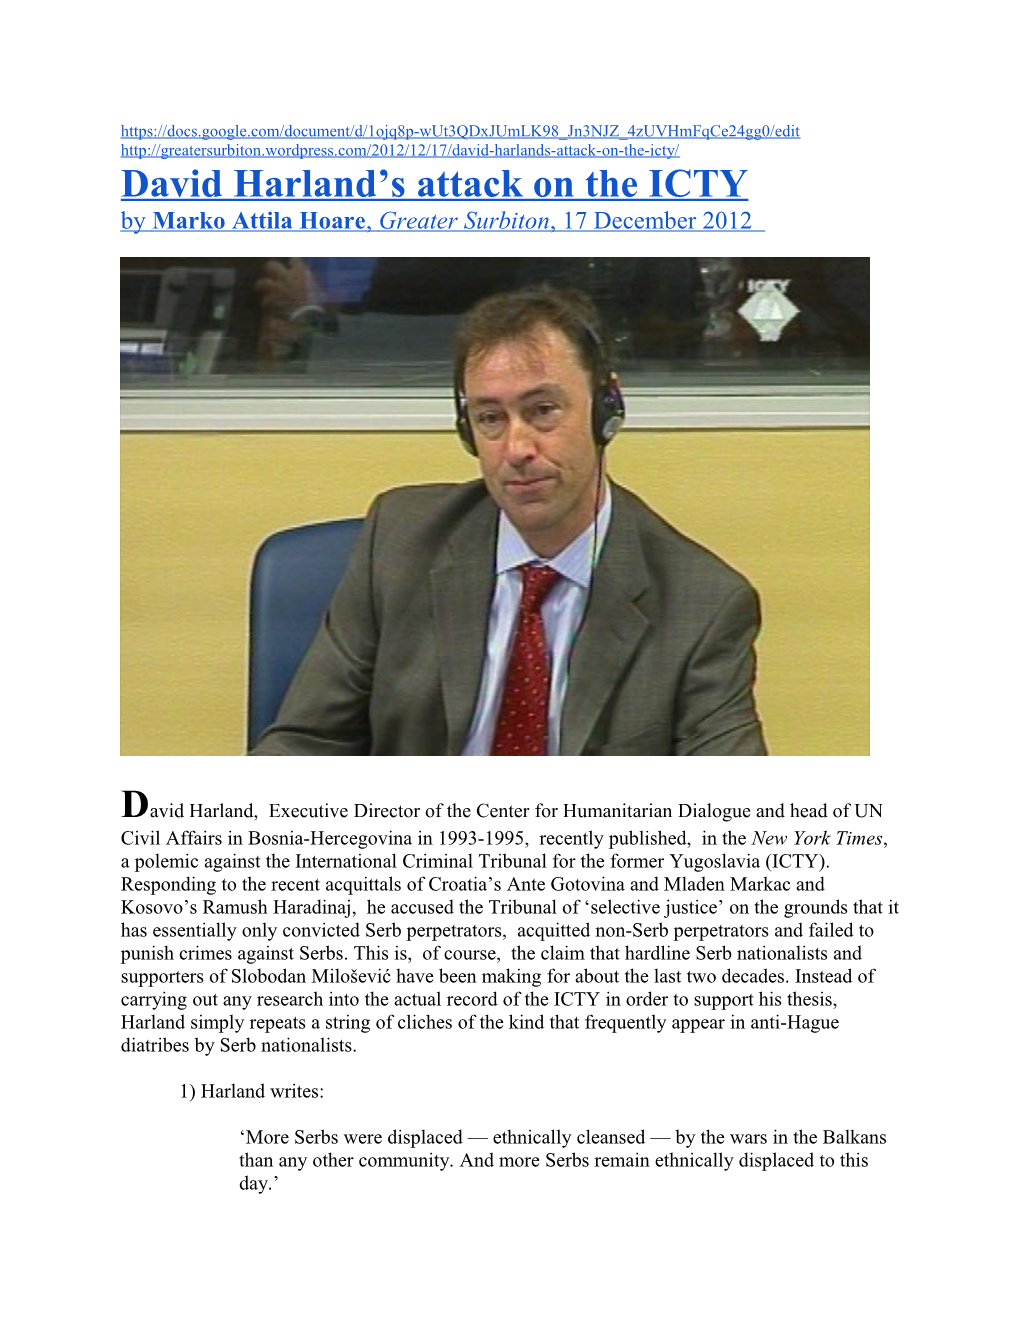 David Harland S Attack on the ICTY - Marko Attila Hoare Greater Surbiton 17 December 2012